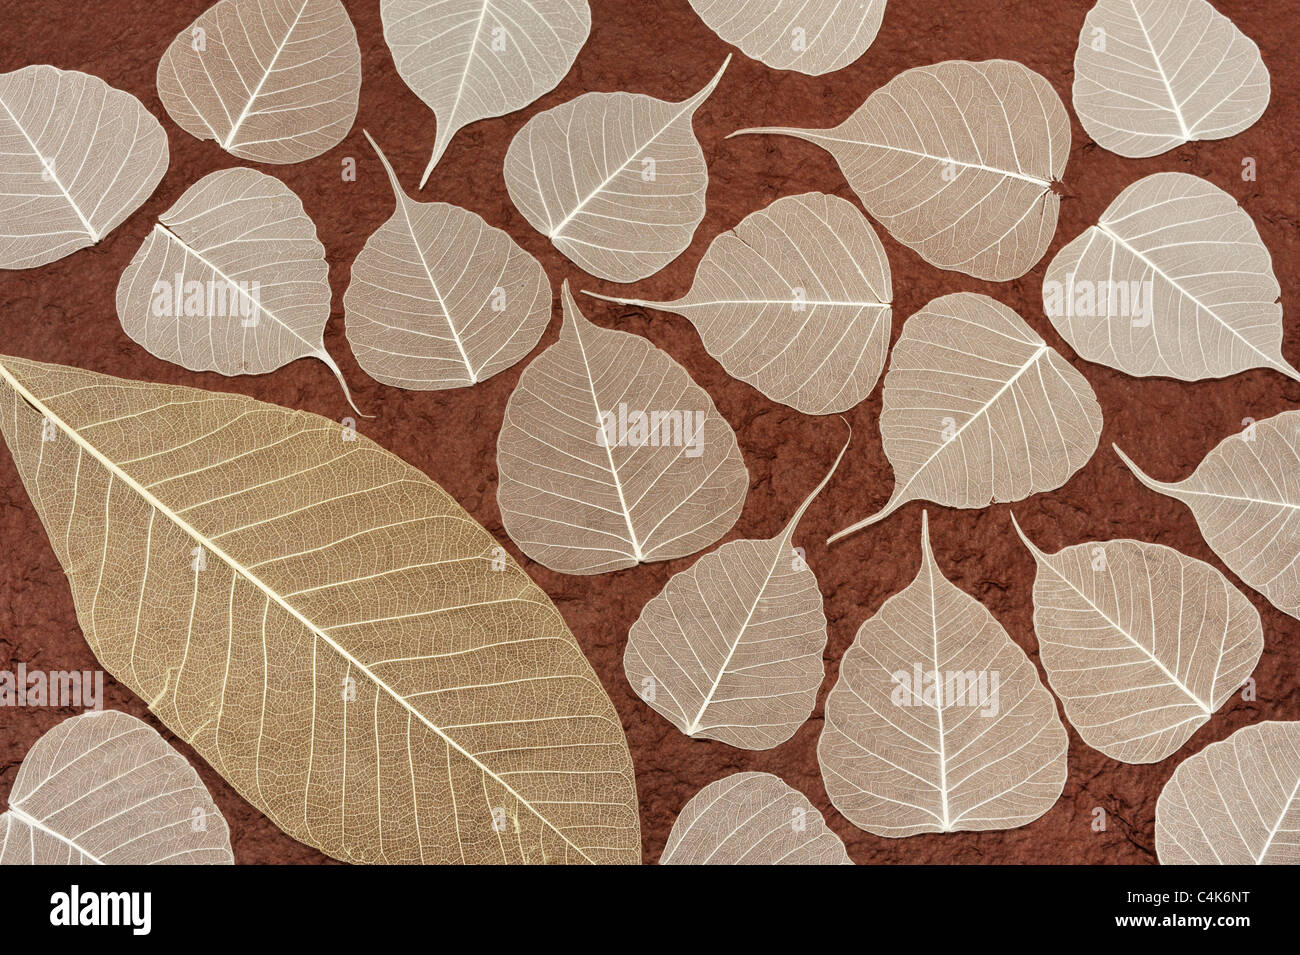 White skeletal leaves over brown handmade paper - horizontal background Stock Photo